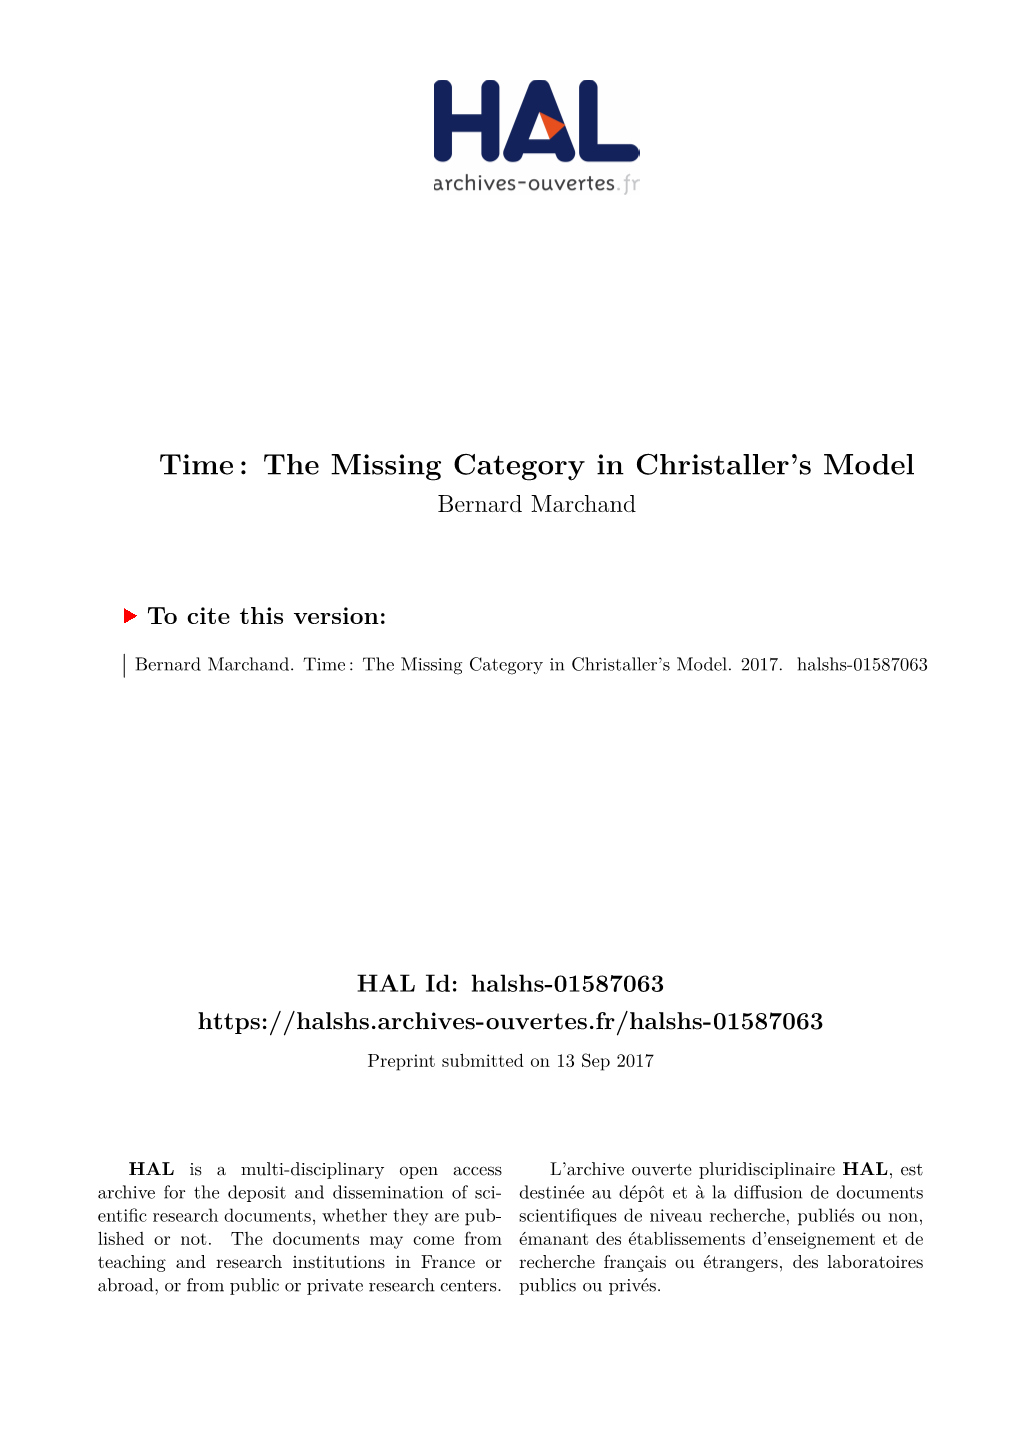 The Missing Category in Christaller's Model ______